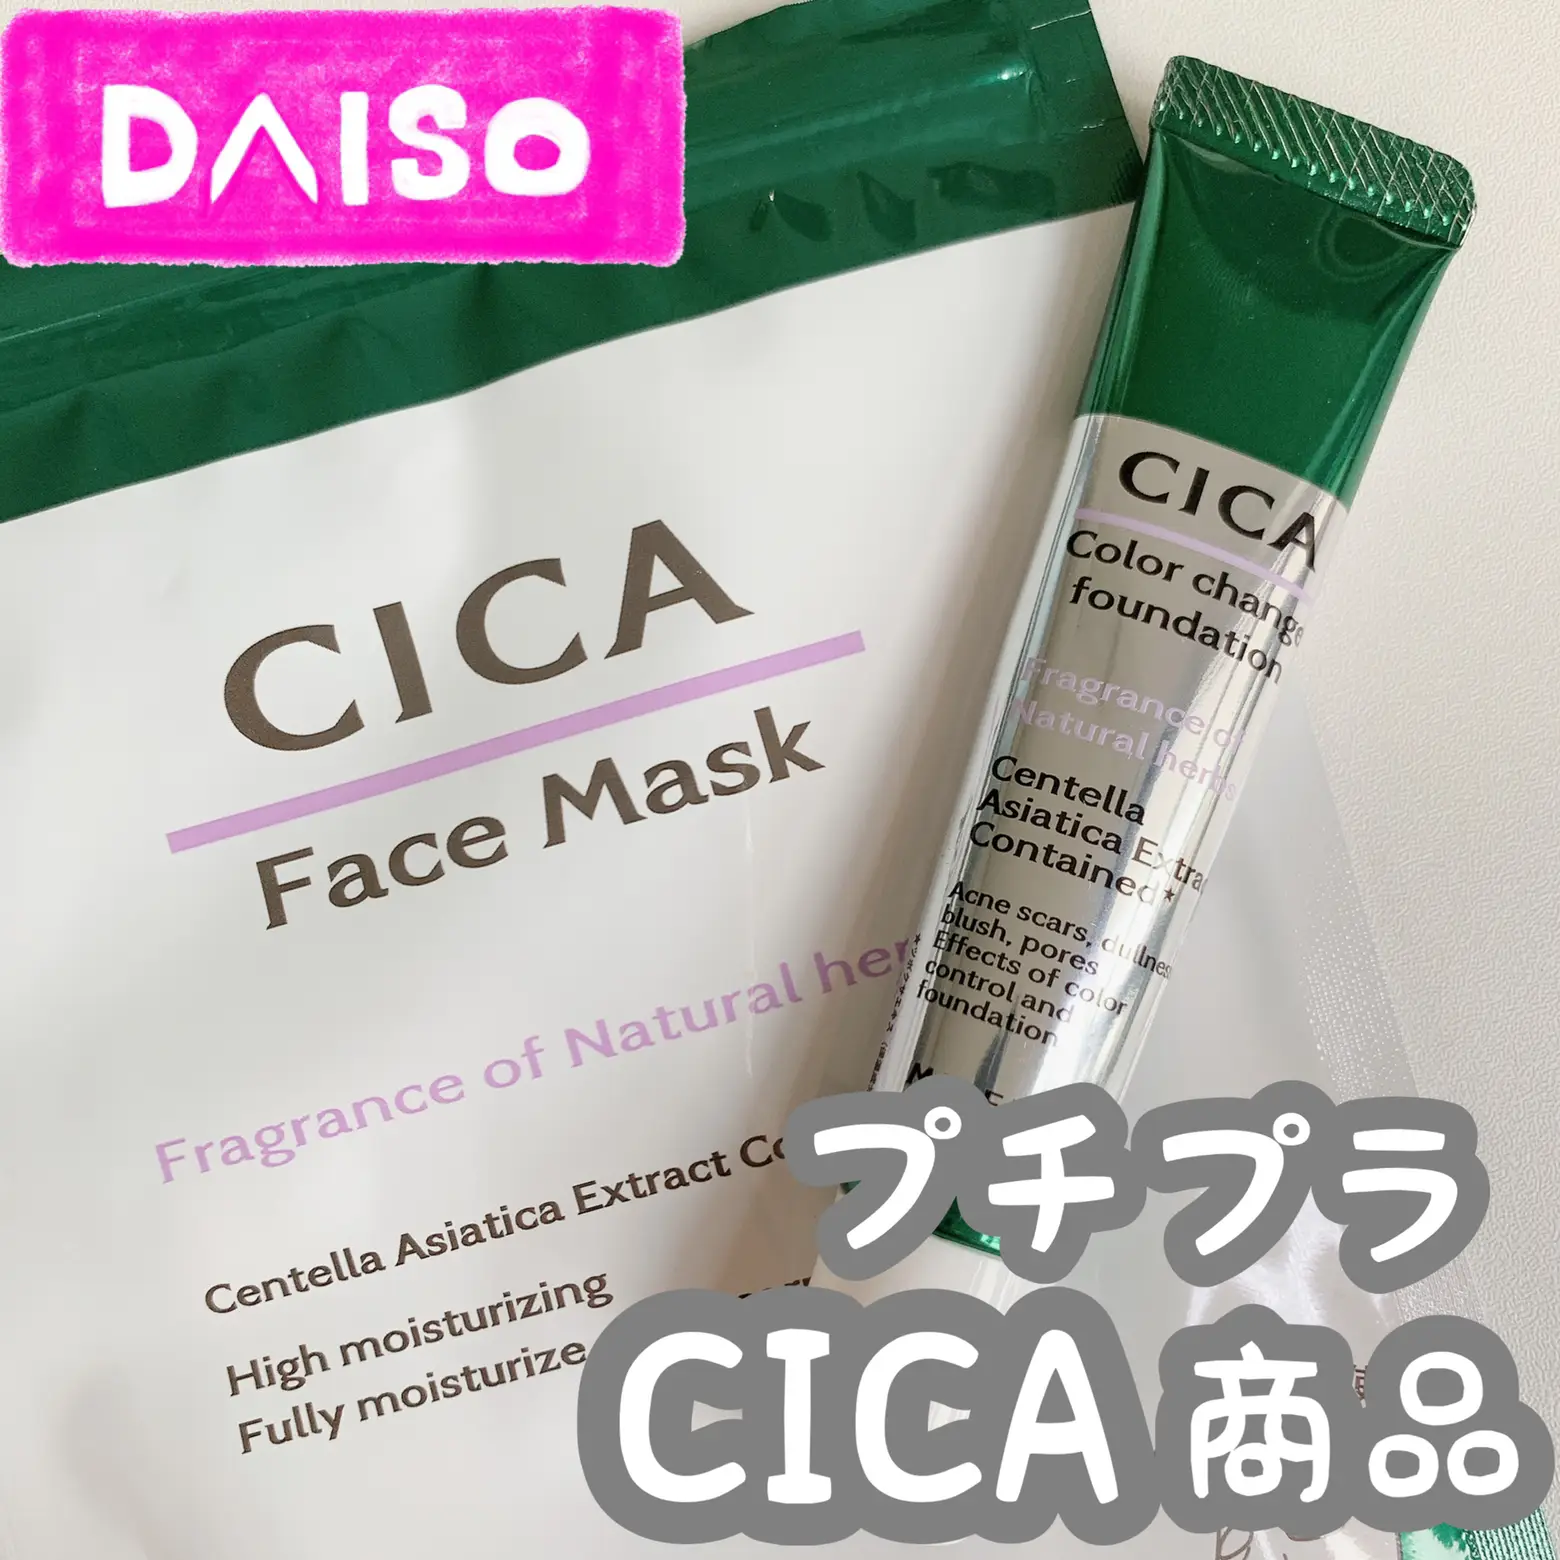 Sheet mask from Daiso bought for 200 yen. 3 sheet masks for 200 yen is